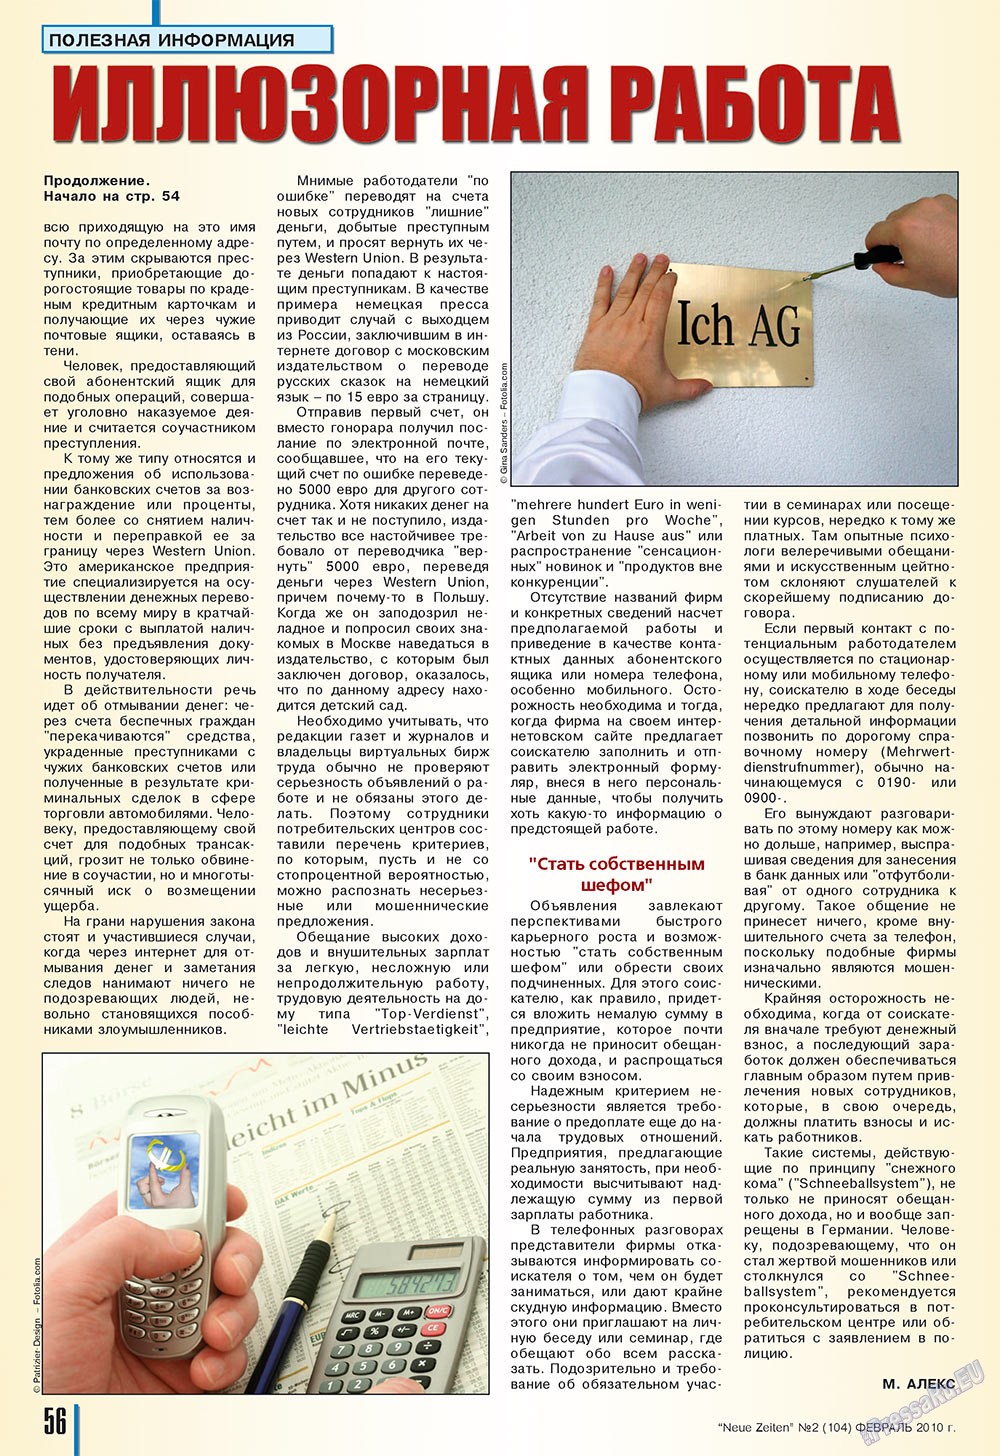 Neue Zeiten (журнал). 2010 год, номер 2, стр. 56